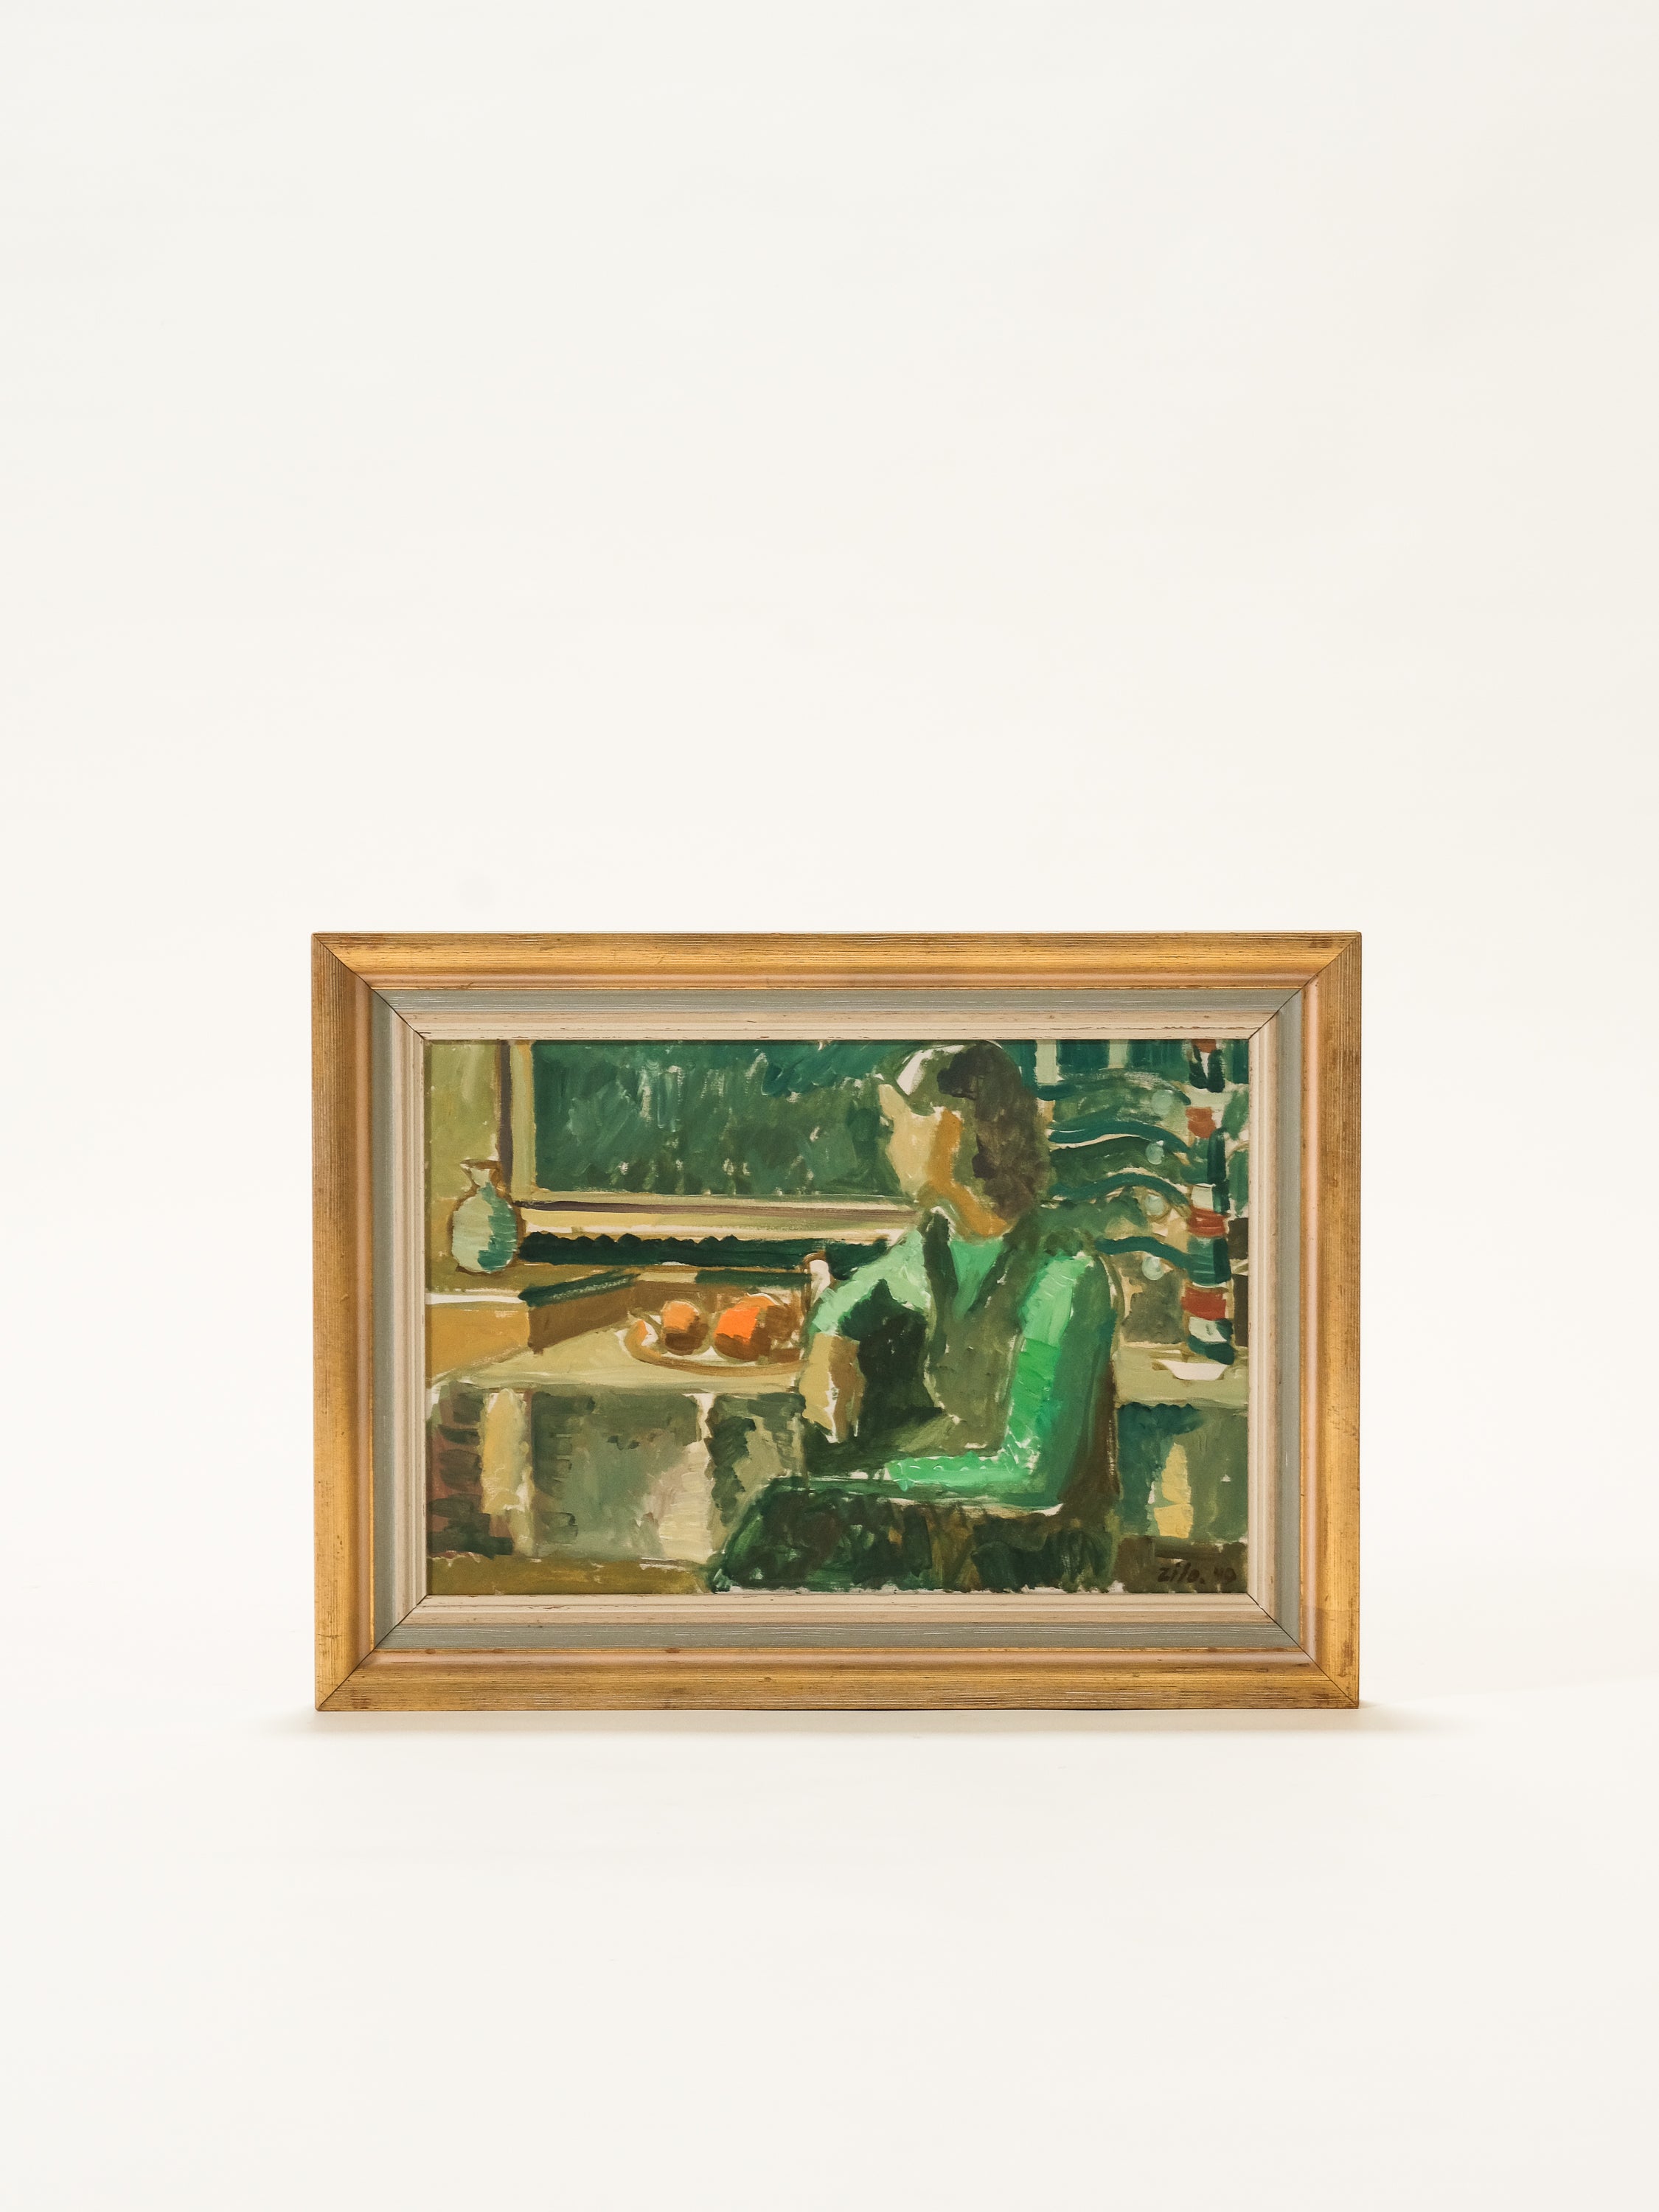 Oil on Canvas, Gunnar Zilo, 1949 | 72 x 54 cm